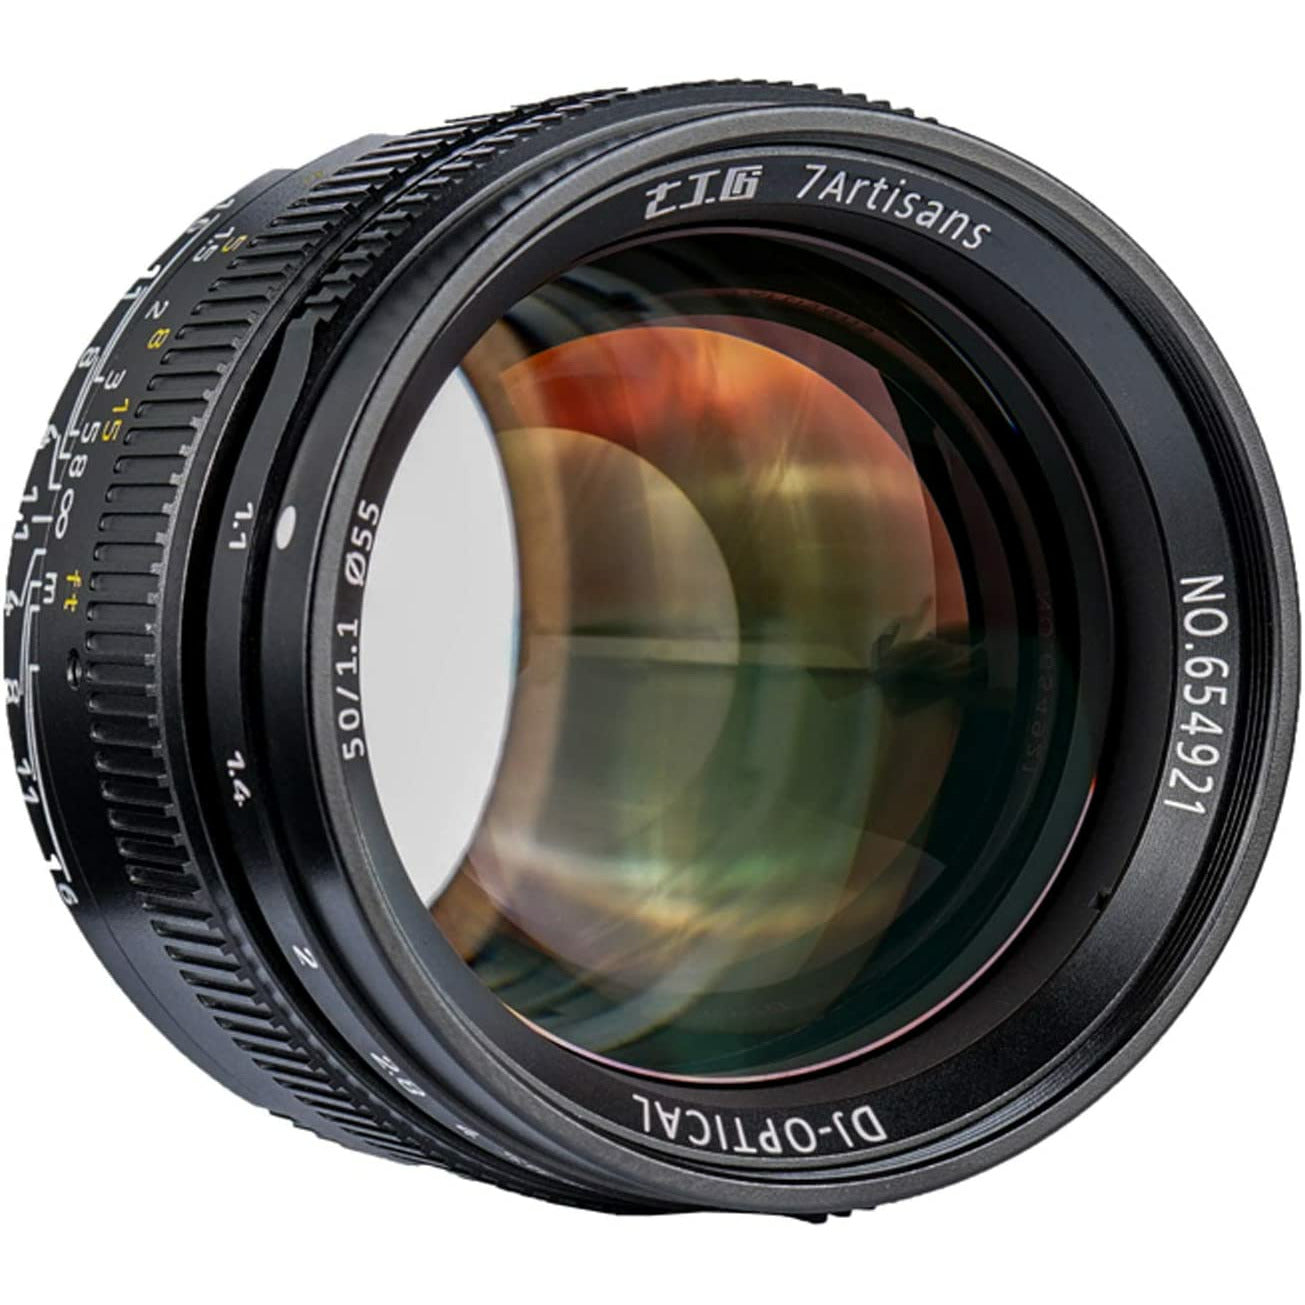 7Artisans 50mm f1.1 Full Frame Manual Prime Lens for Leica M Mount Mirrorless Cameras with Bokeh Effect